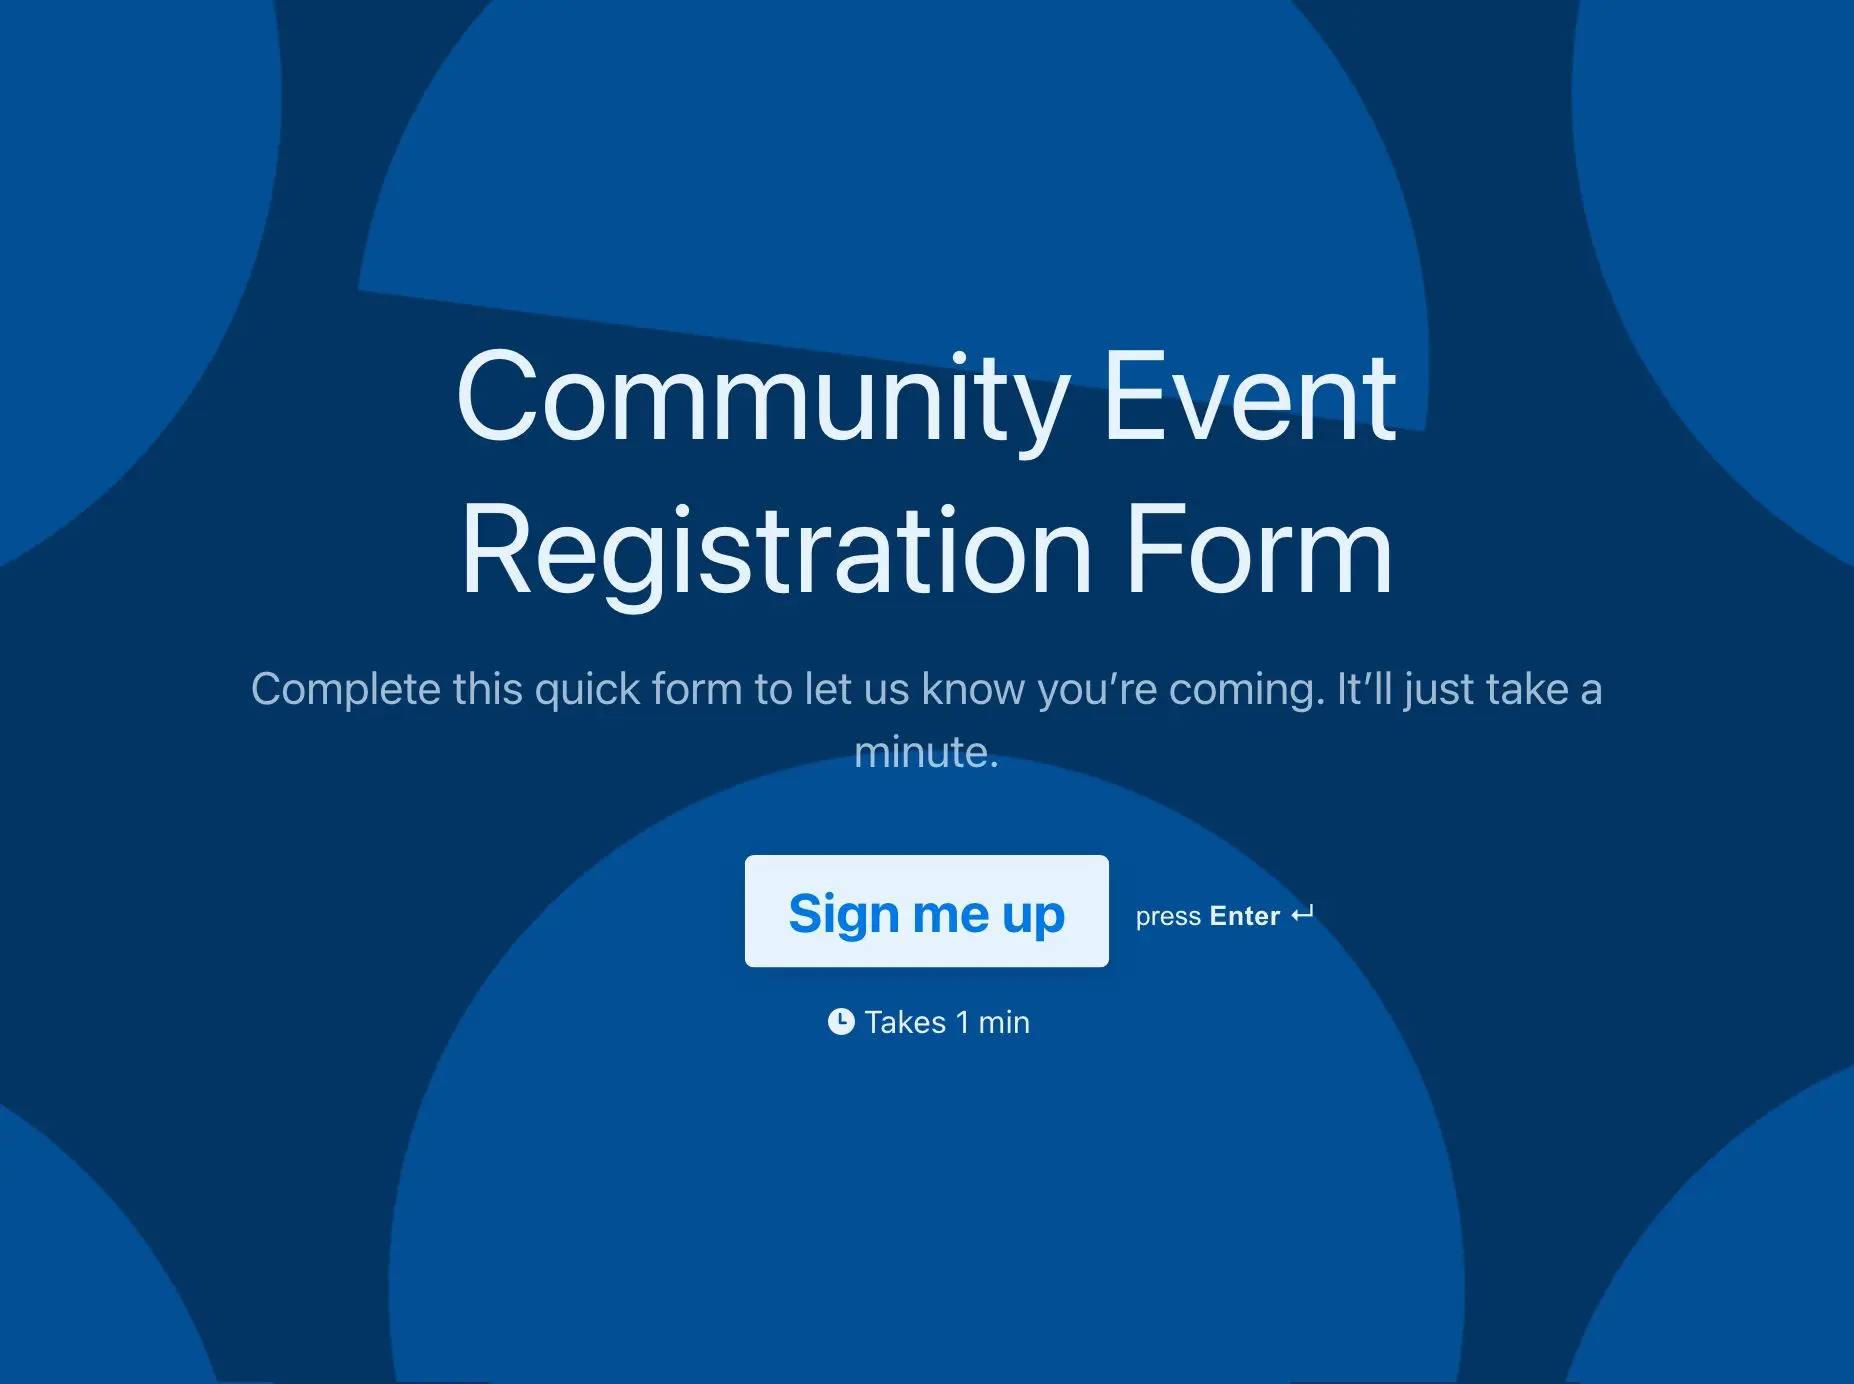 Community Event Registration Form Template Hero